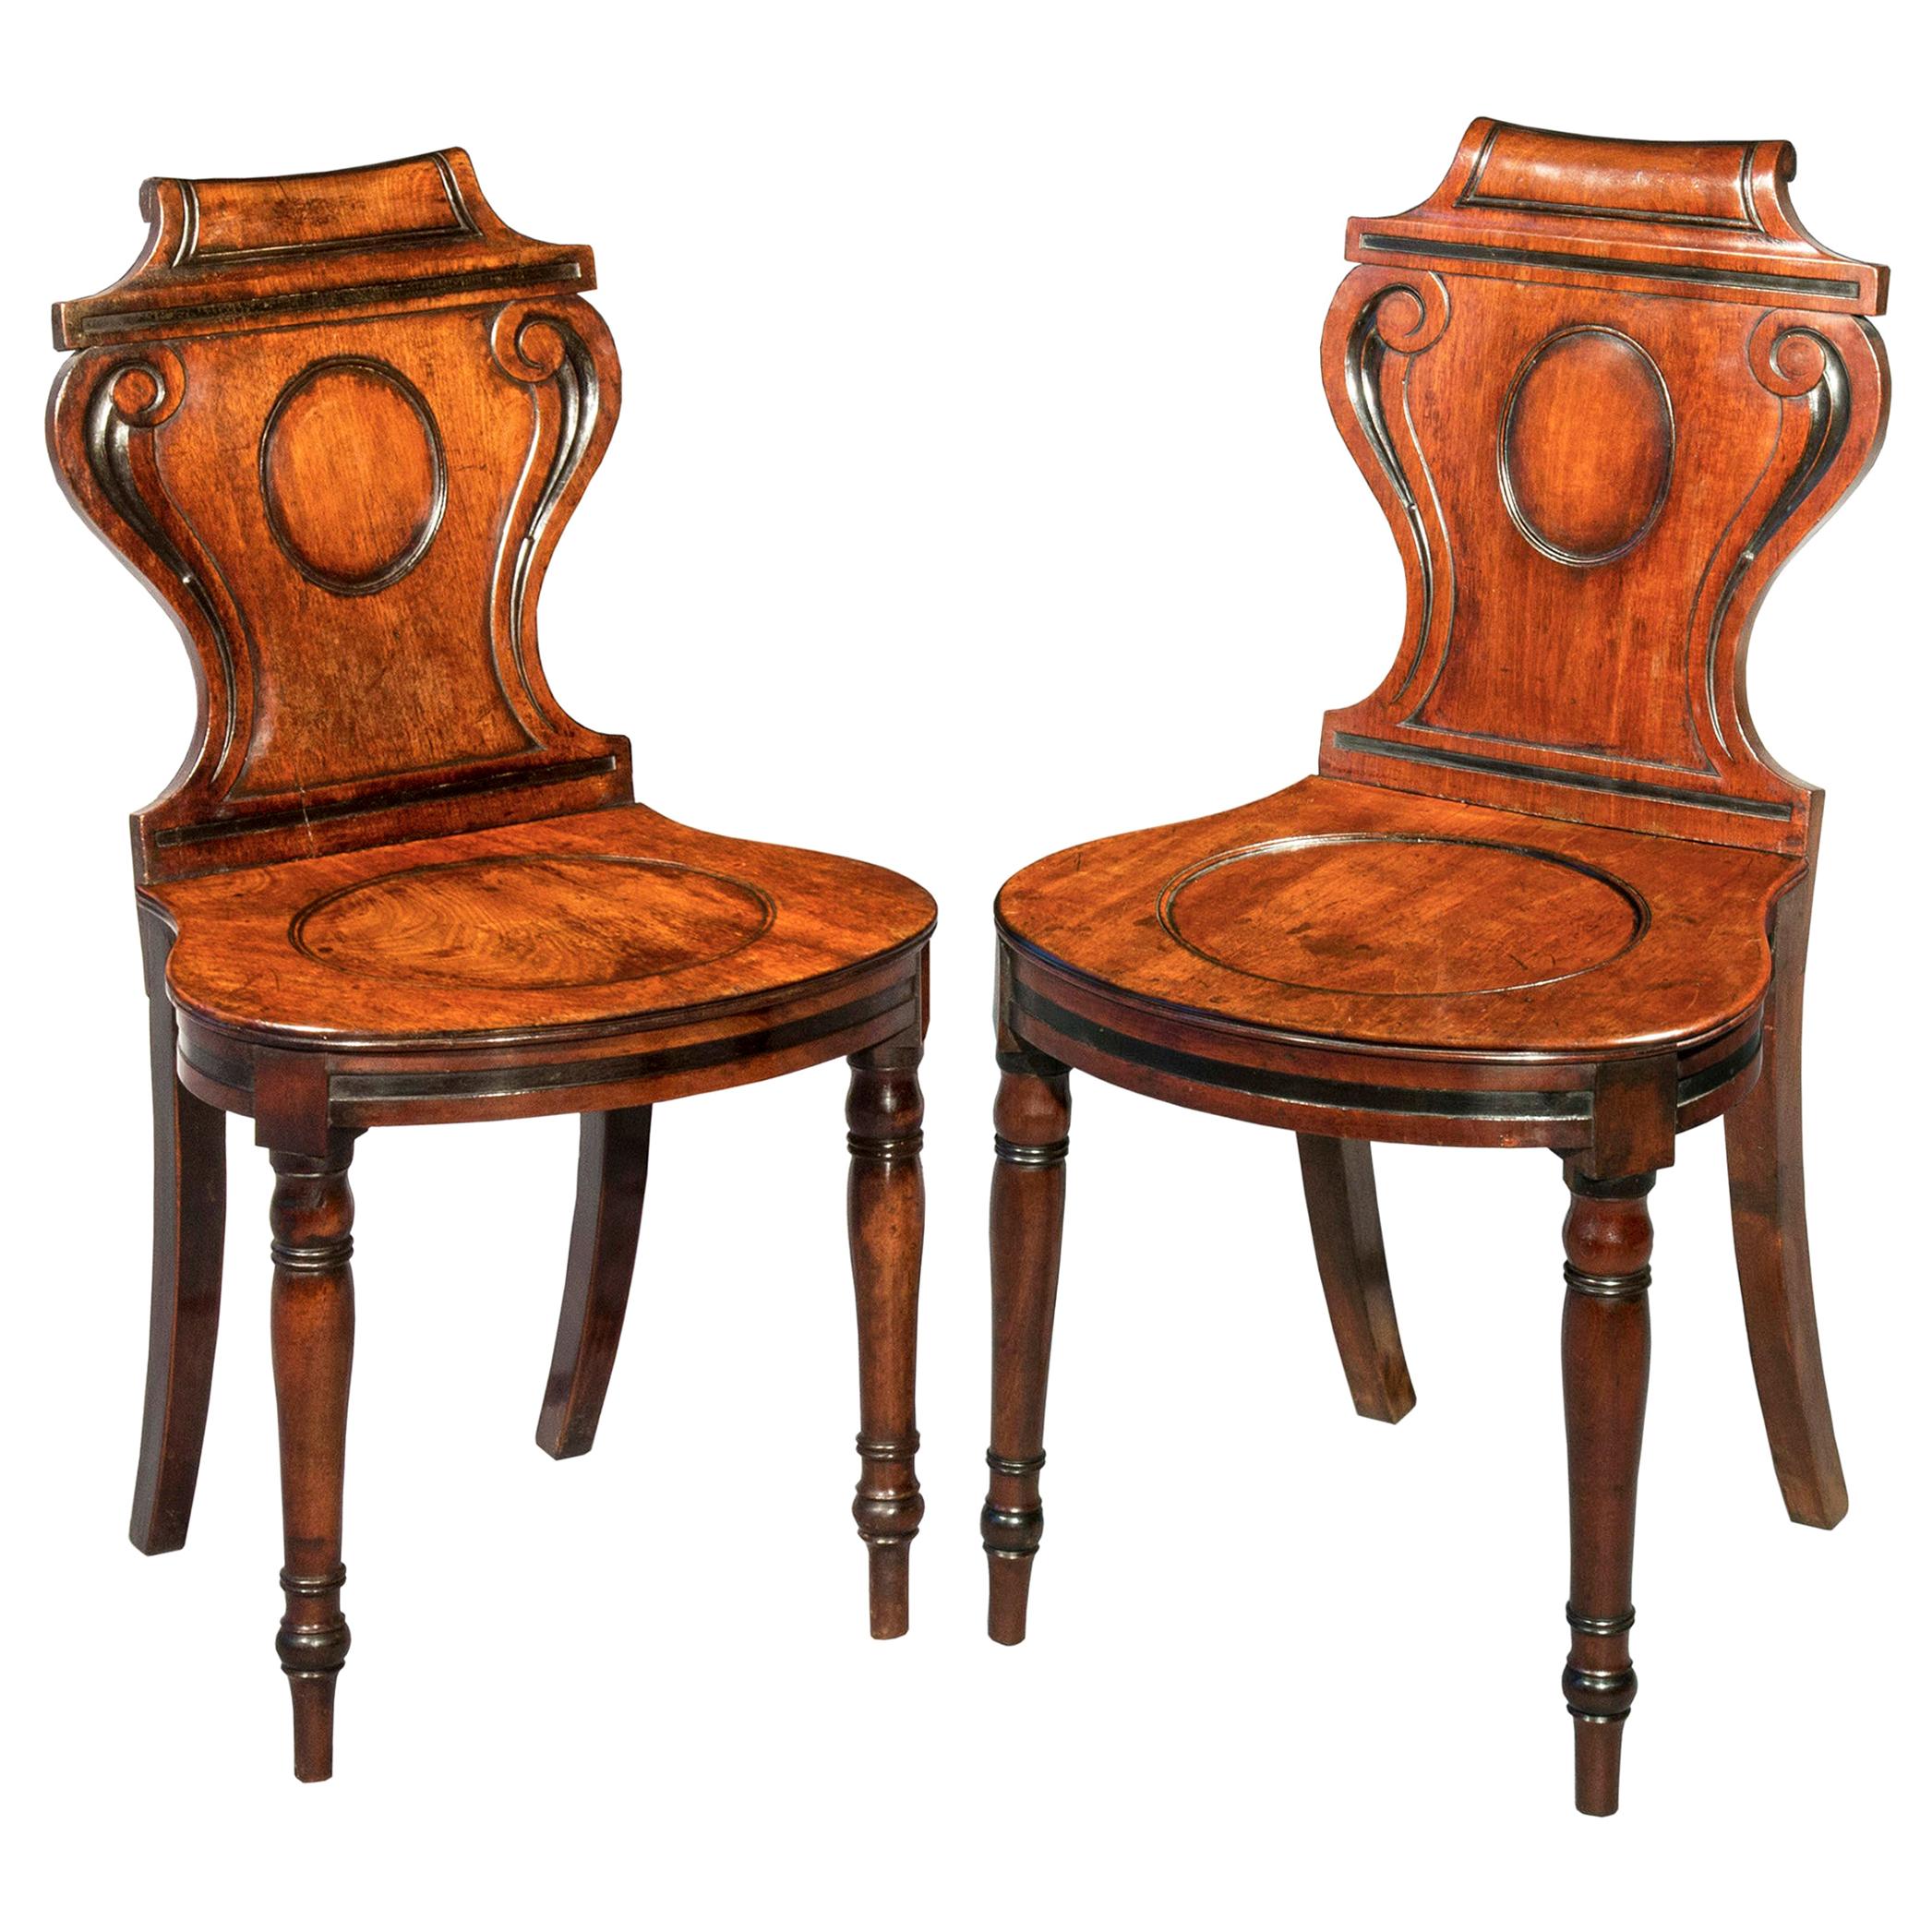 Pair of Georgian Regency Hall Chairs, circa 1815